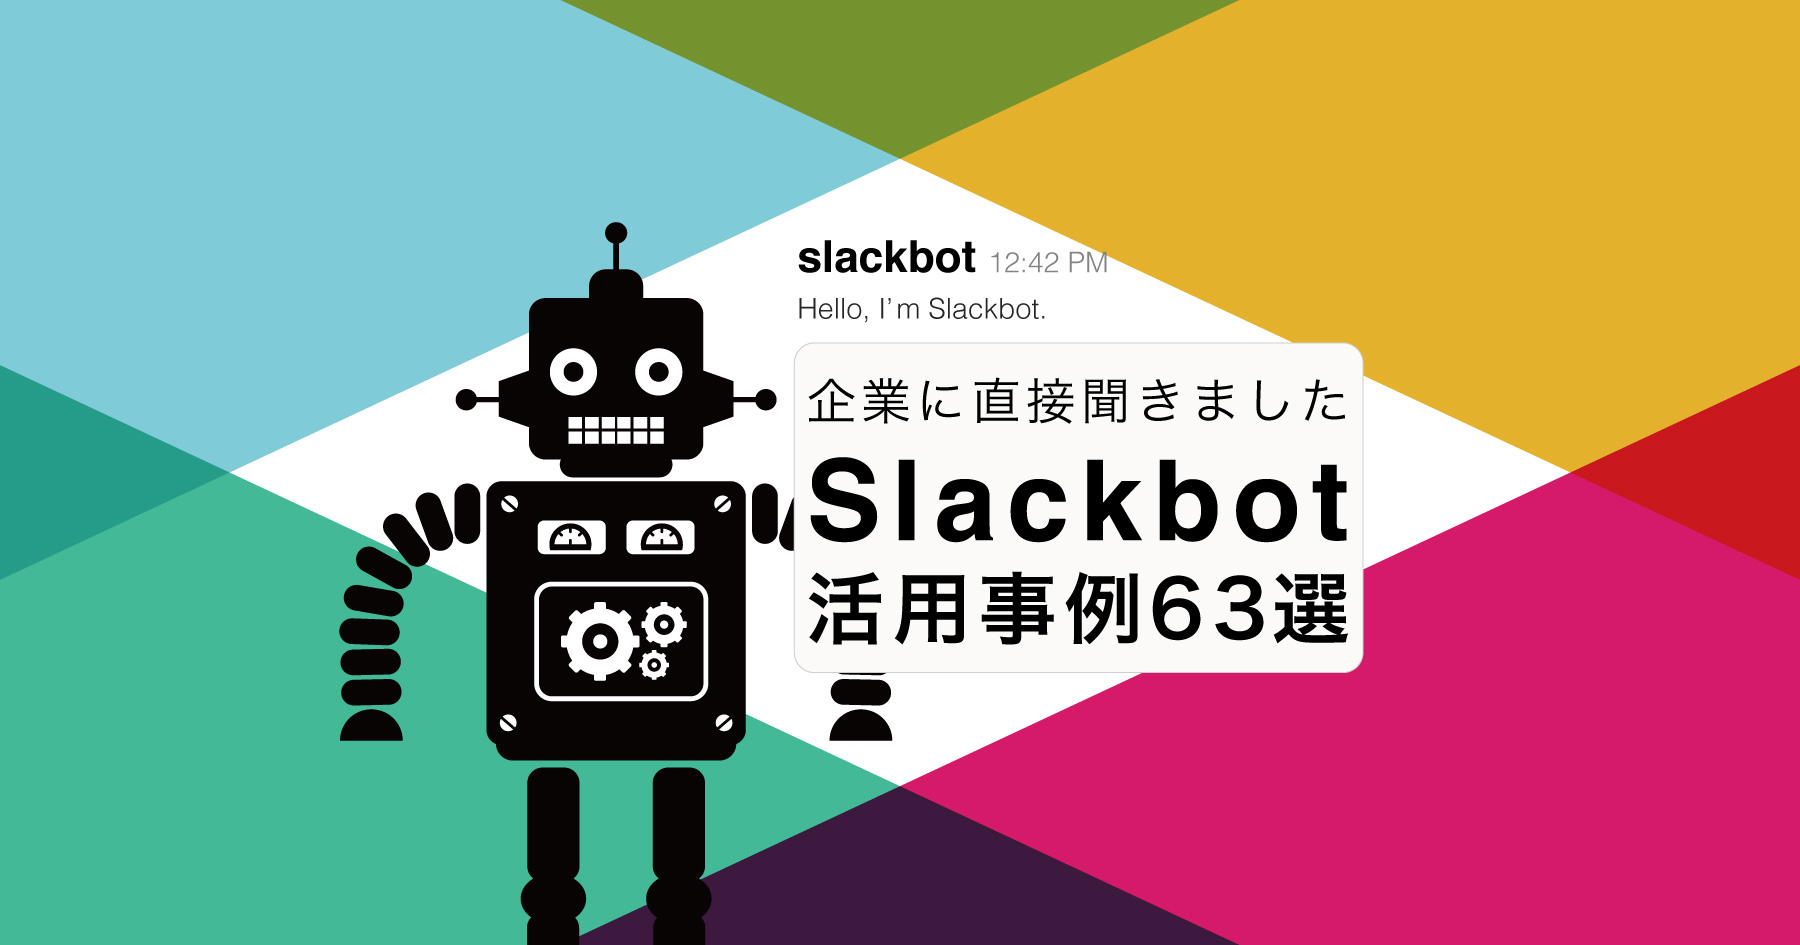 ［Slackbot大全］63種類の事例・ツールをまとめて紹介！ botを活用してSlackを便利に【2017夏】